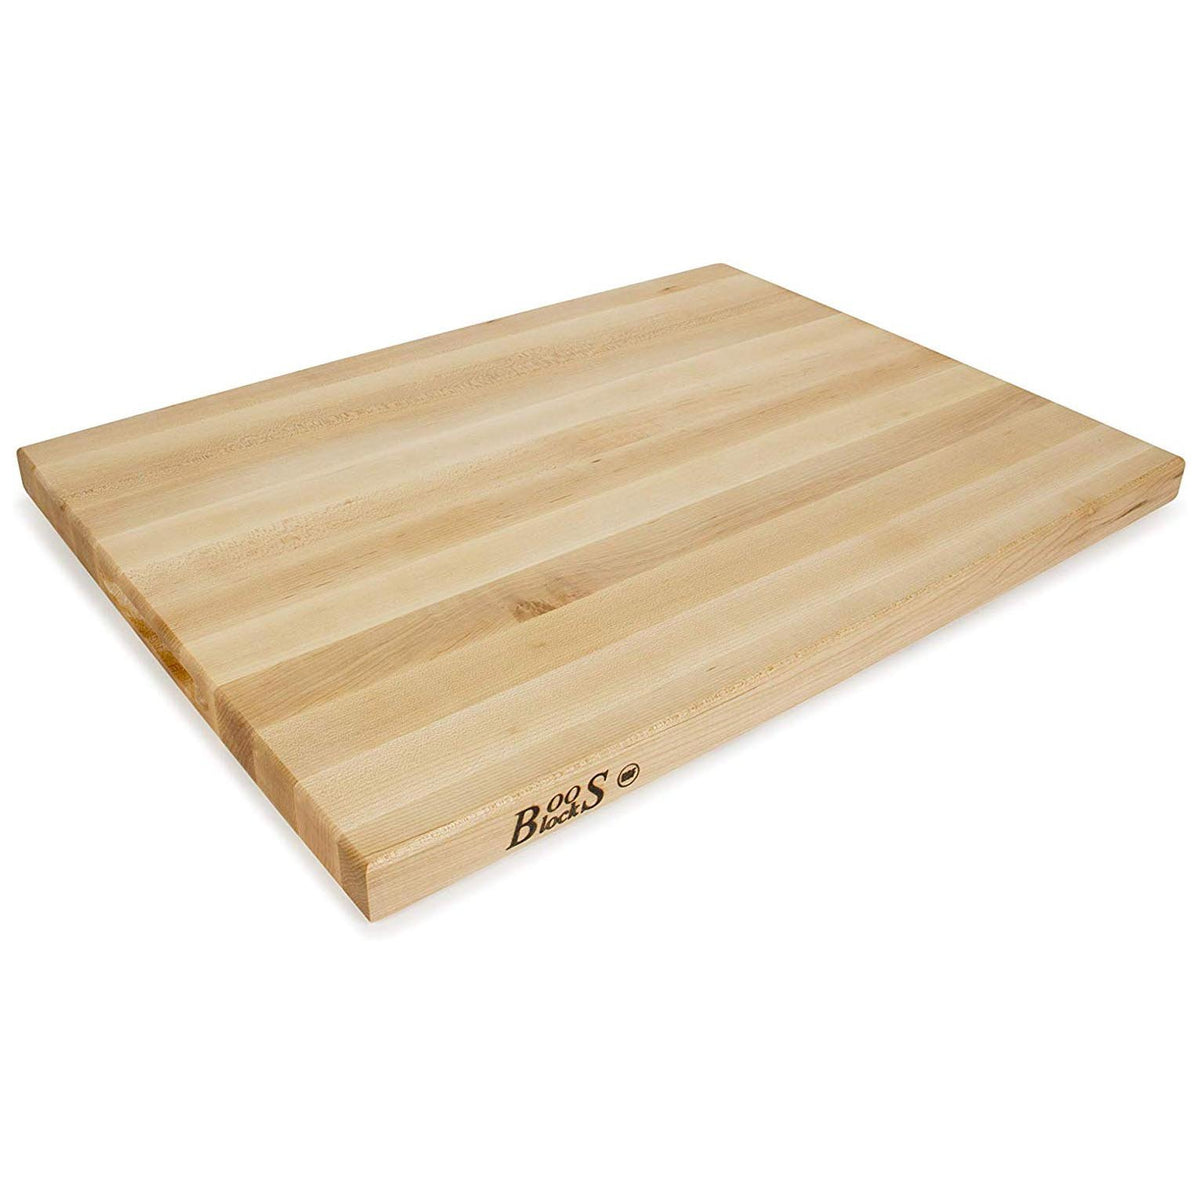 John Boos Maple Wood Reversible 20 X 15 X 15 Cutting Board 160780 1200x1200 ?v=1632286081